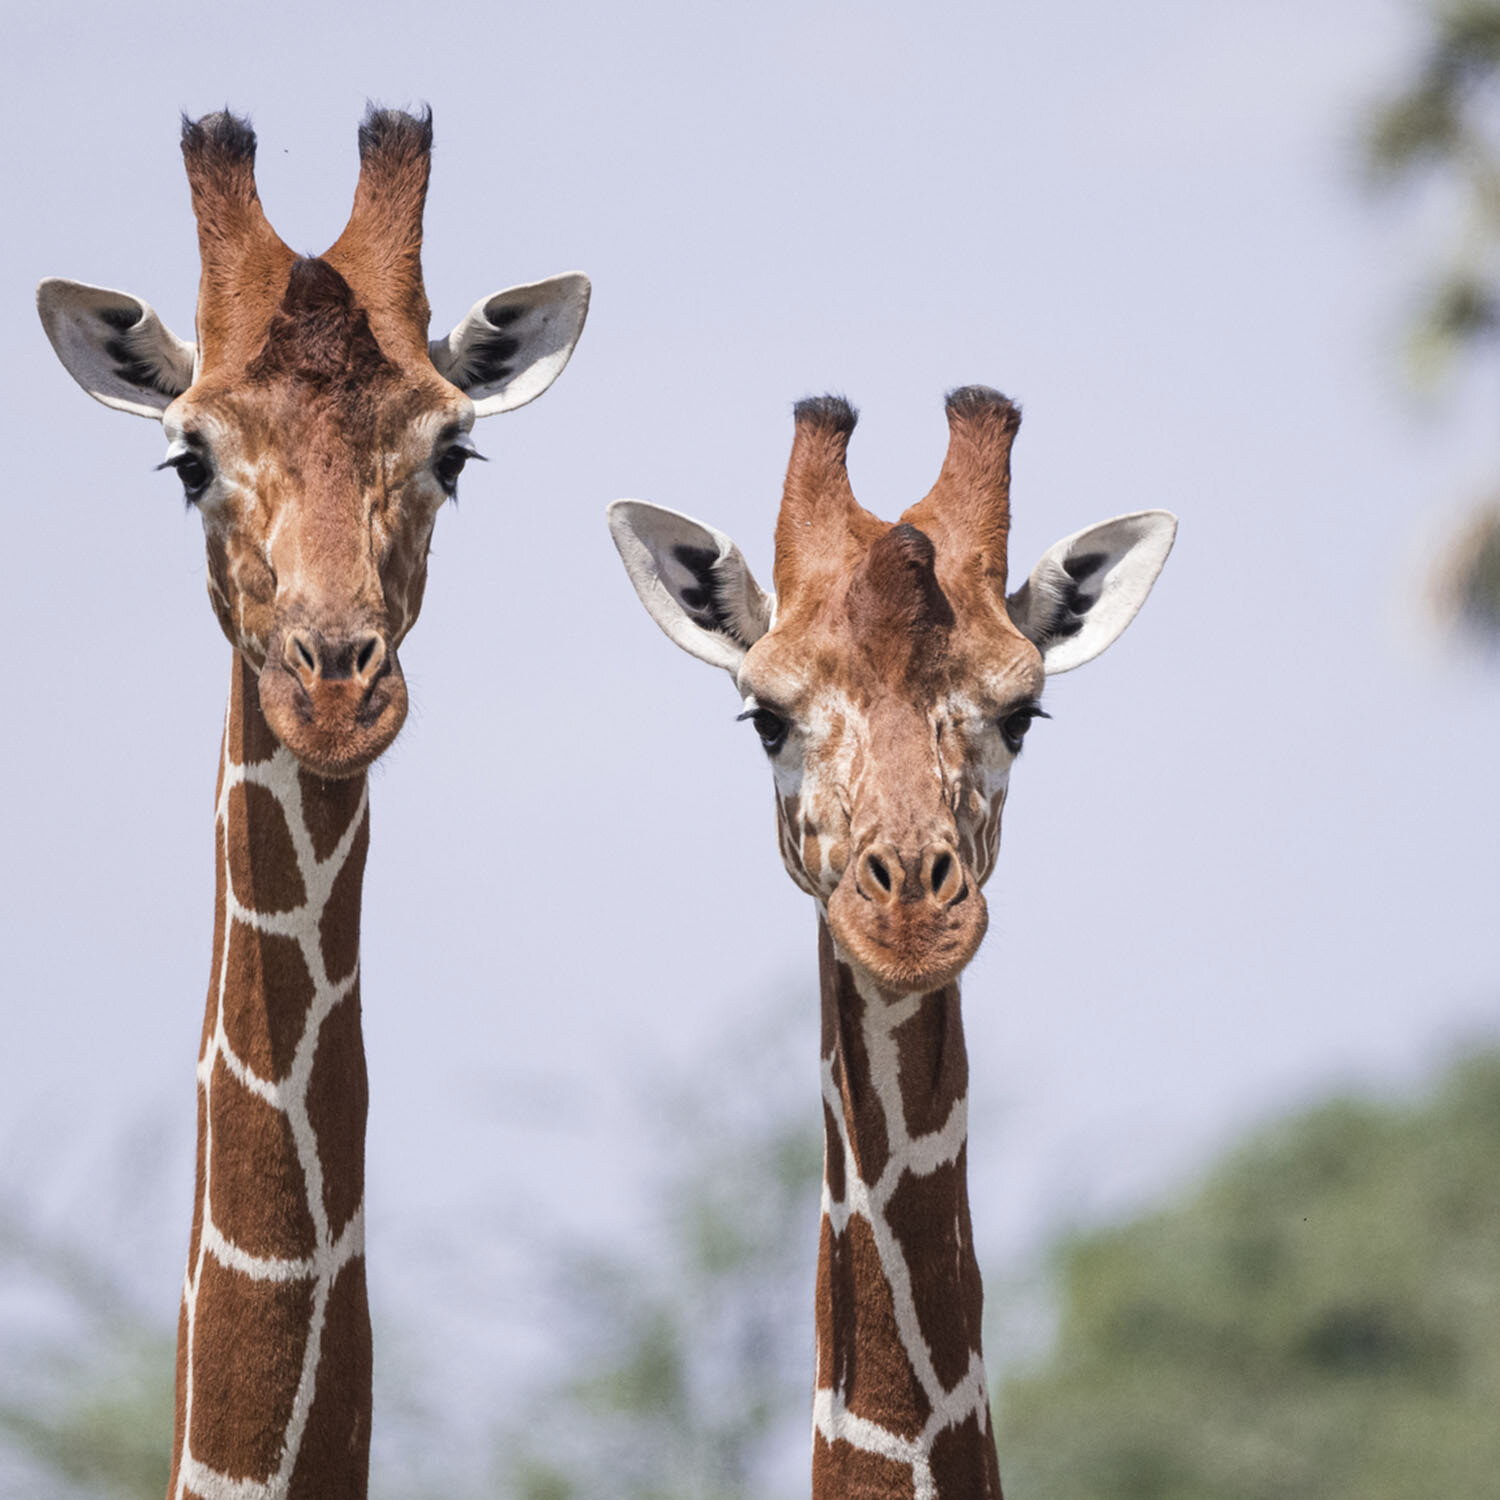 Two Rothschilds giraffes standing side by side at the Giraffe Manor in Nairobi.